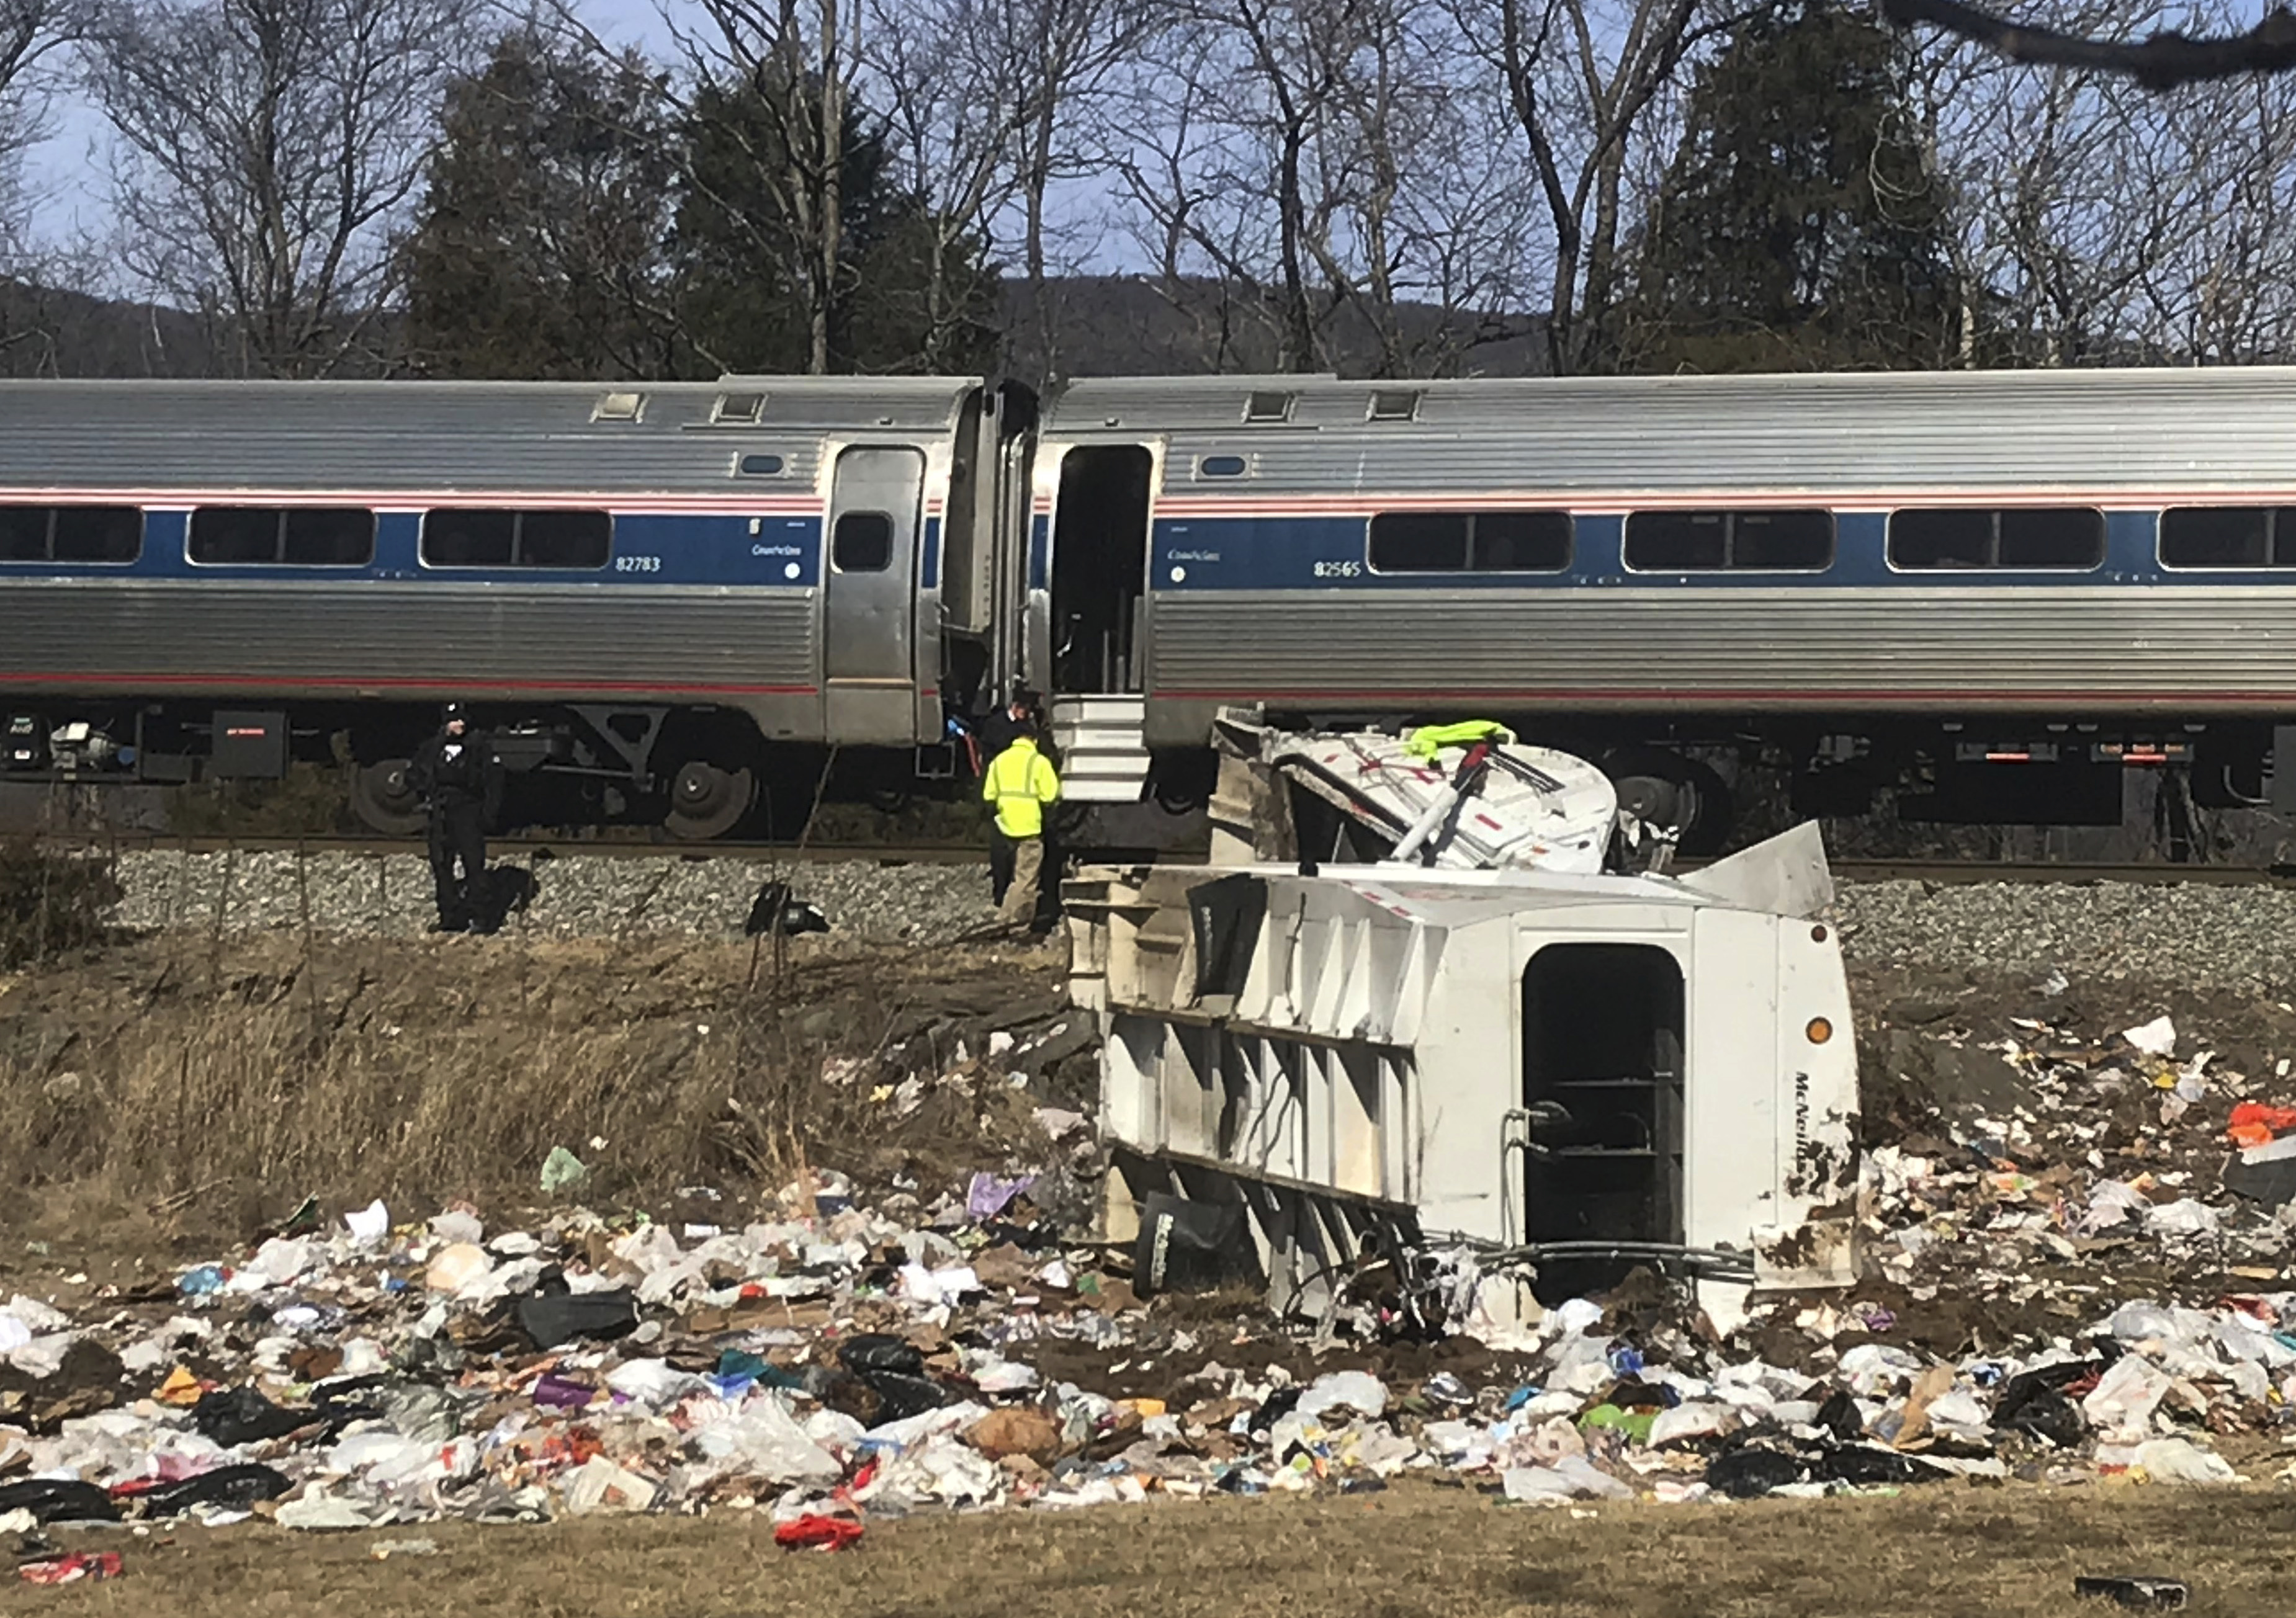 Emergency personnel work at the scene of a train crash in Virginia (Zack Wajsgrasu/The Daily Progress via AP)